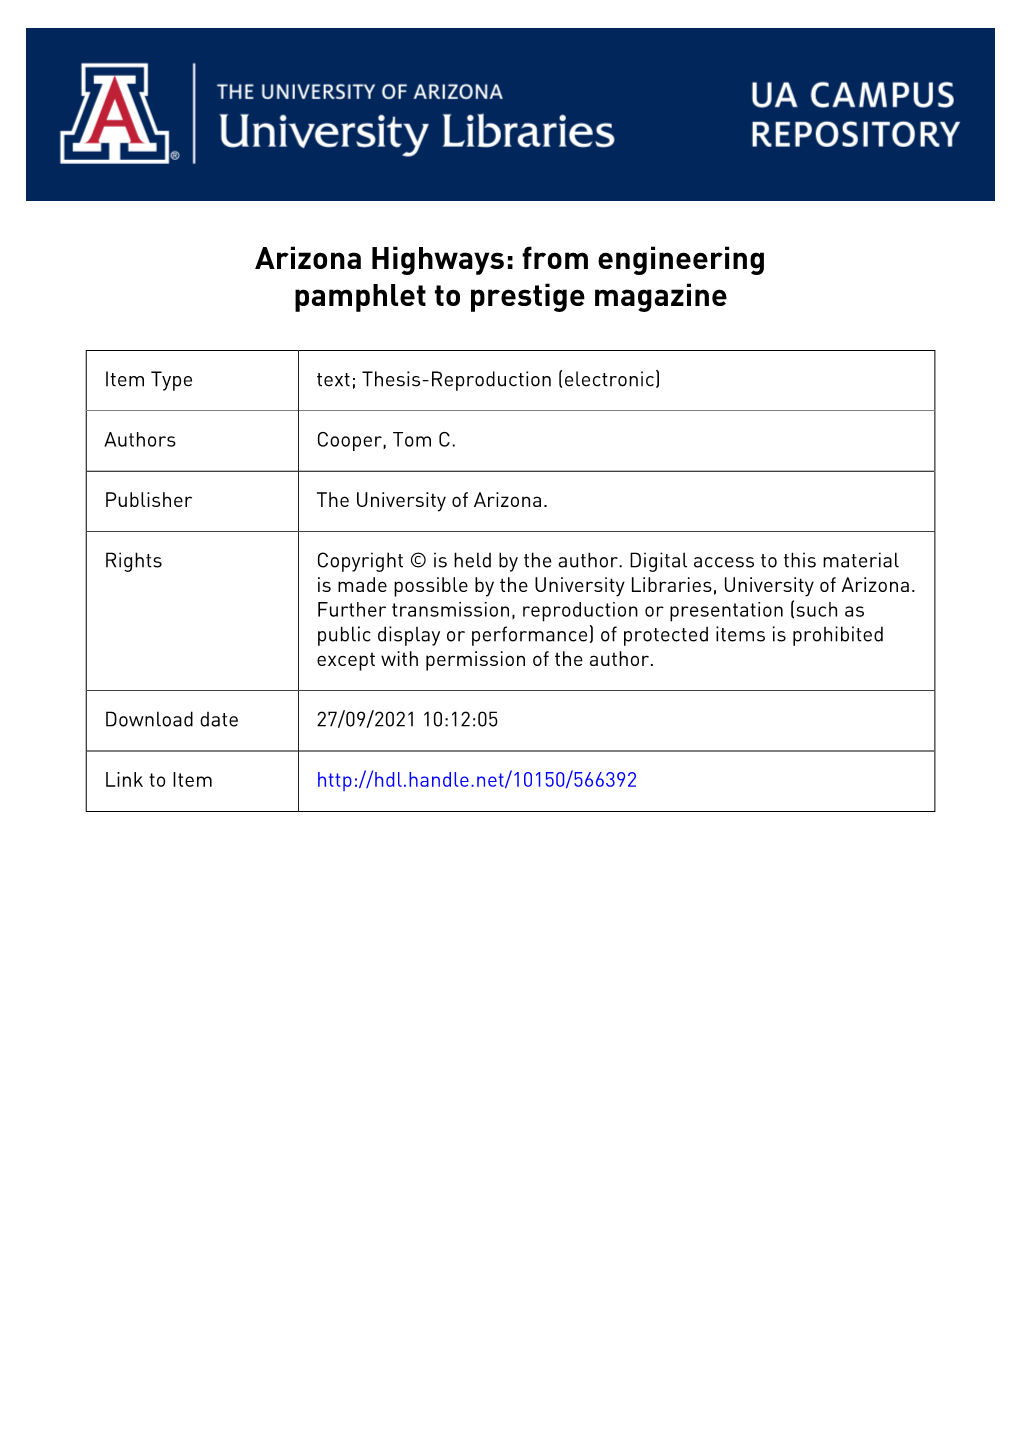 Arizona Highways: from Engineering Pamphlet to Prestige Magazine